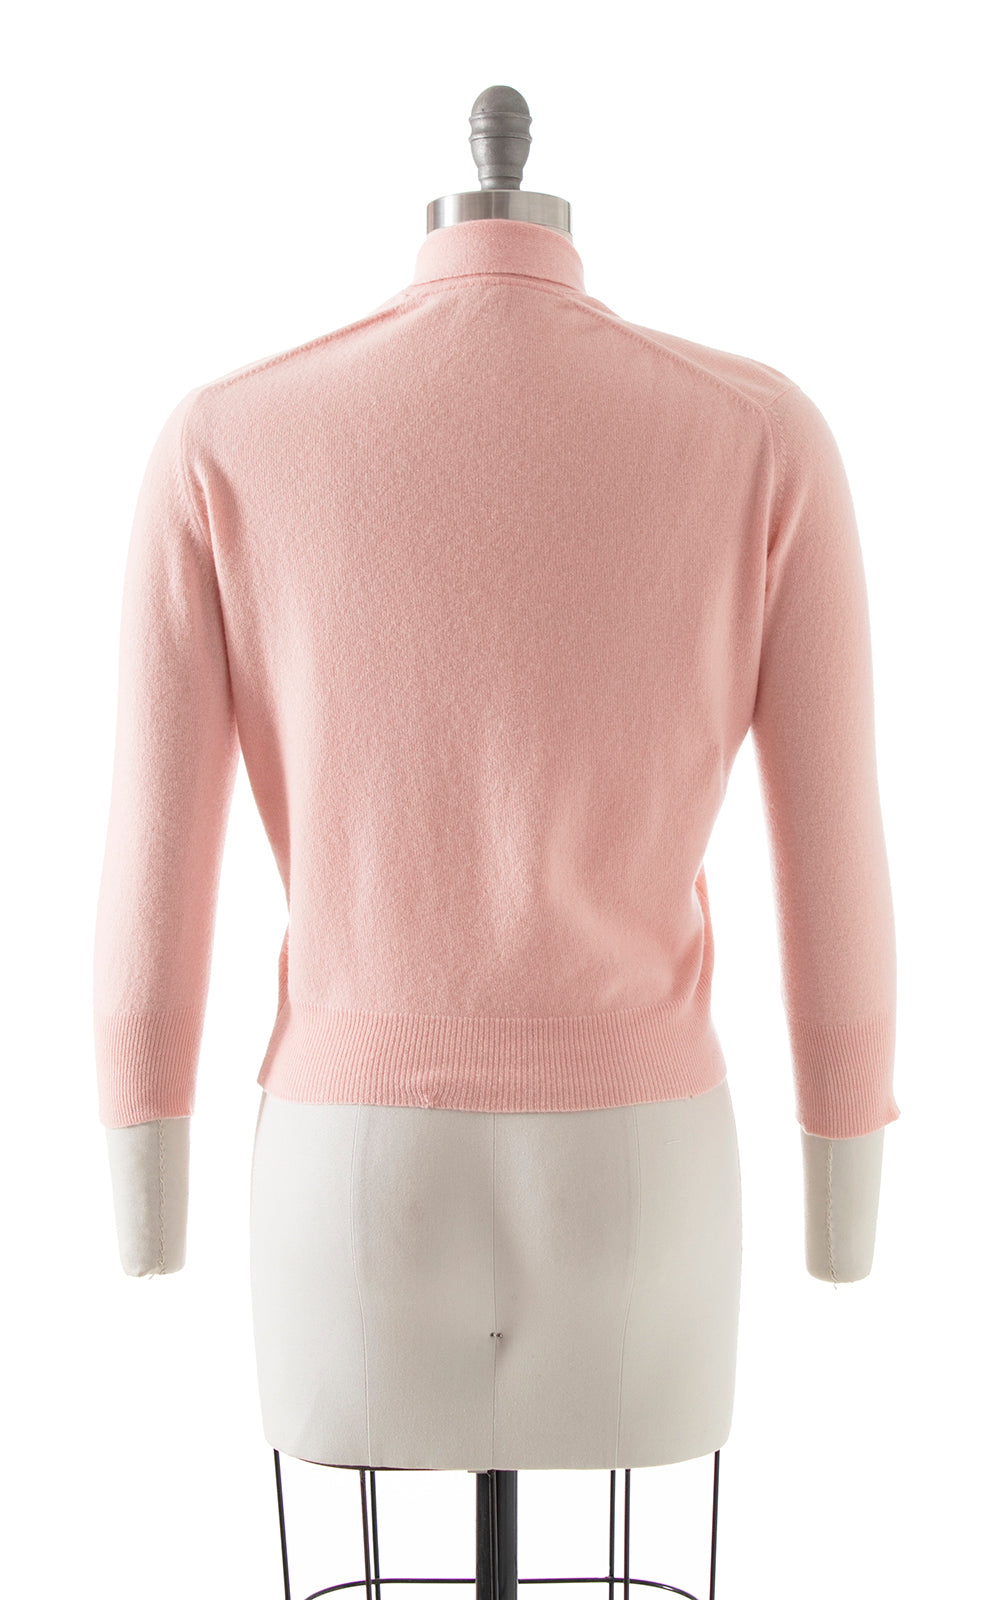 Vintage 1950s 50s Cashmere Blend Knit Light Pink Pullover Sweater Top Birthday Life Vintage